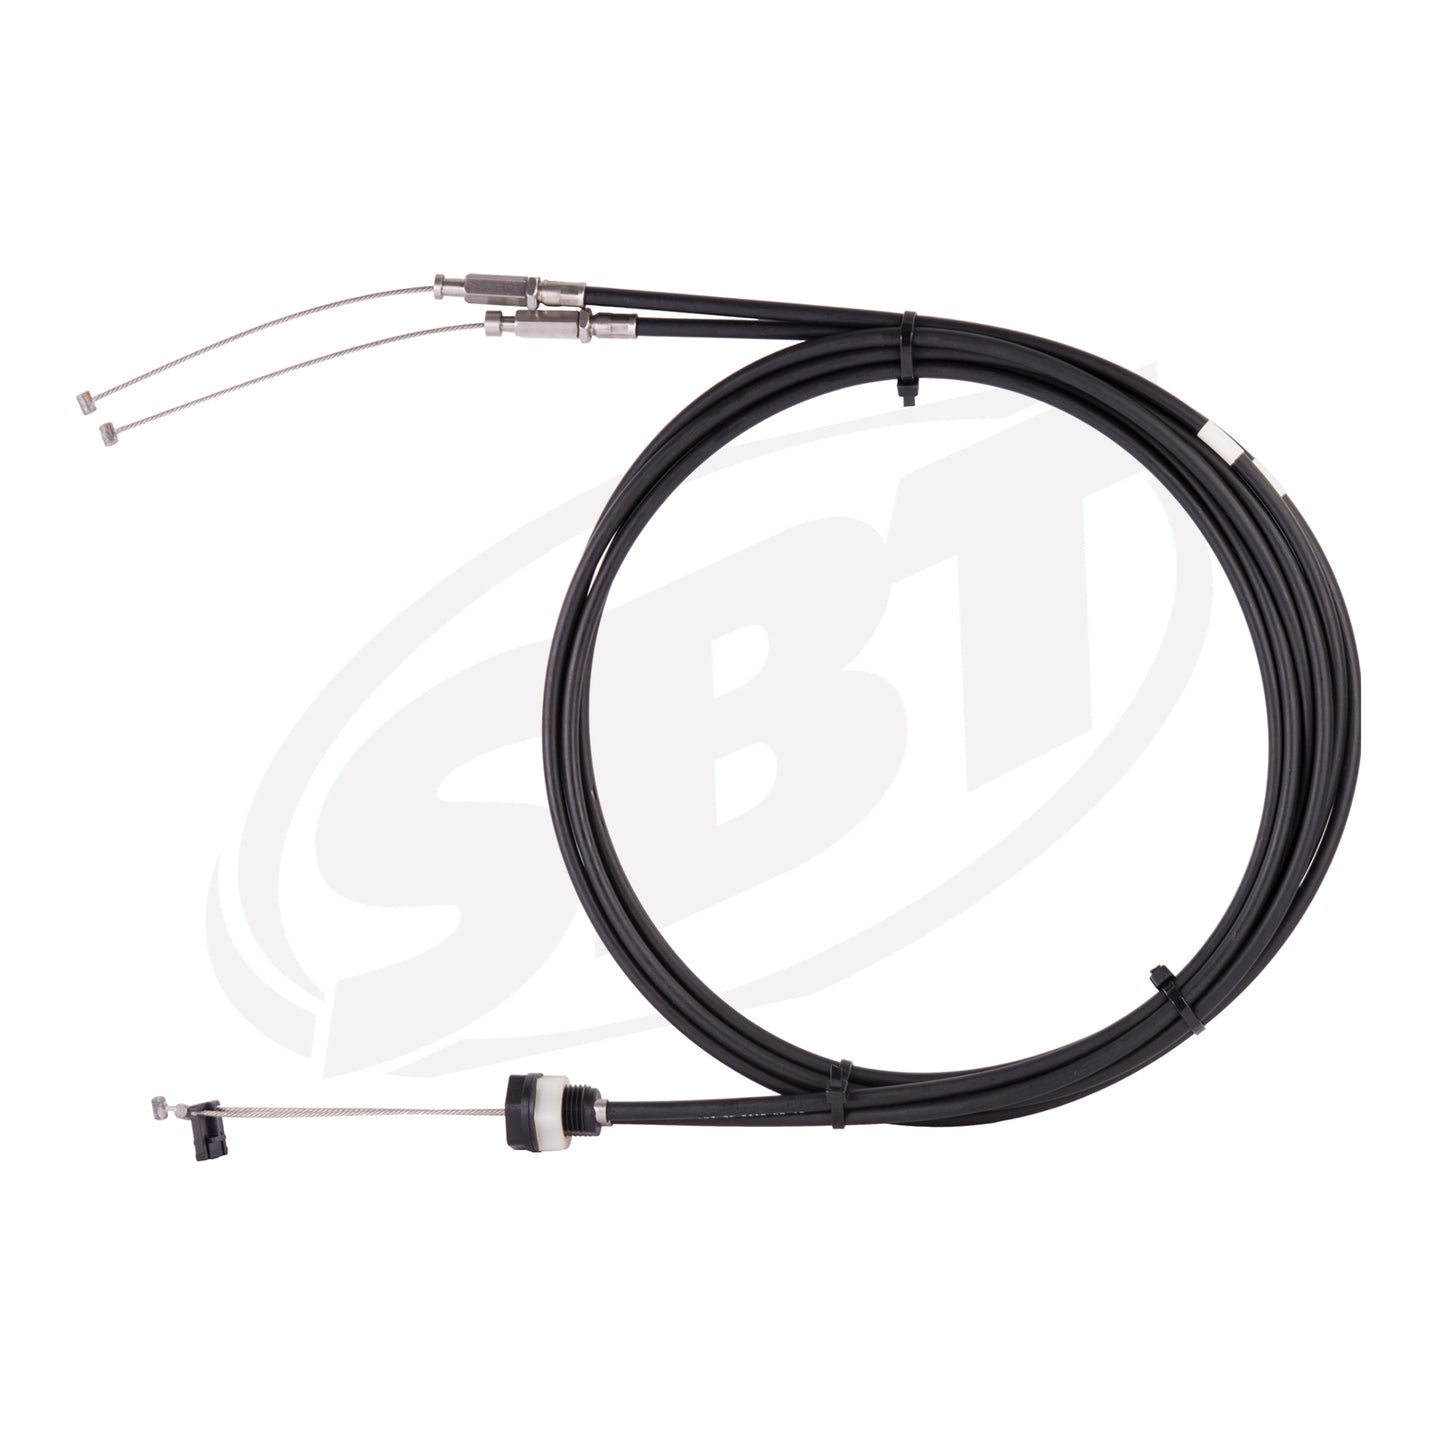 SBT Yamaha Trim Cable FZS /FZR F2C-6153E-00-00 2009 2010 2011 2012 2013 2014 2015 2016